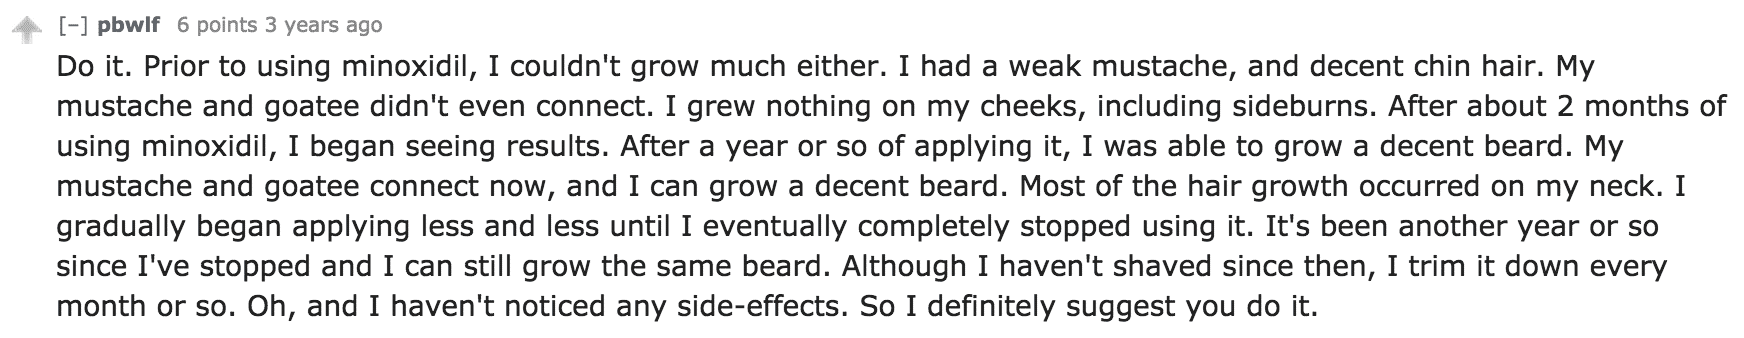 Beard Minoxidil Testimonial Reddit